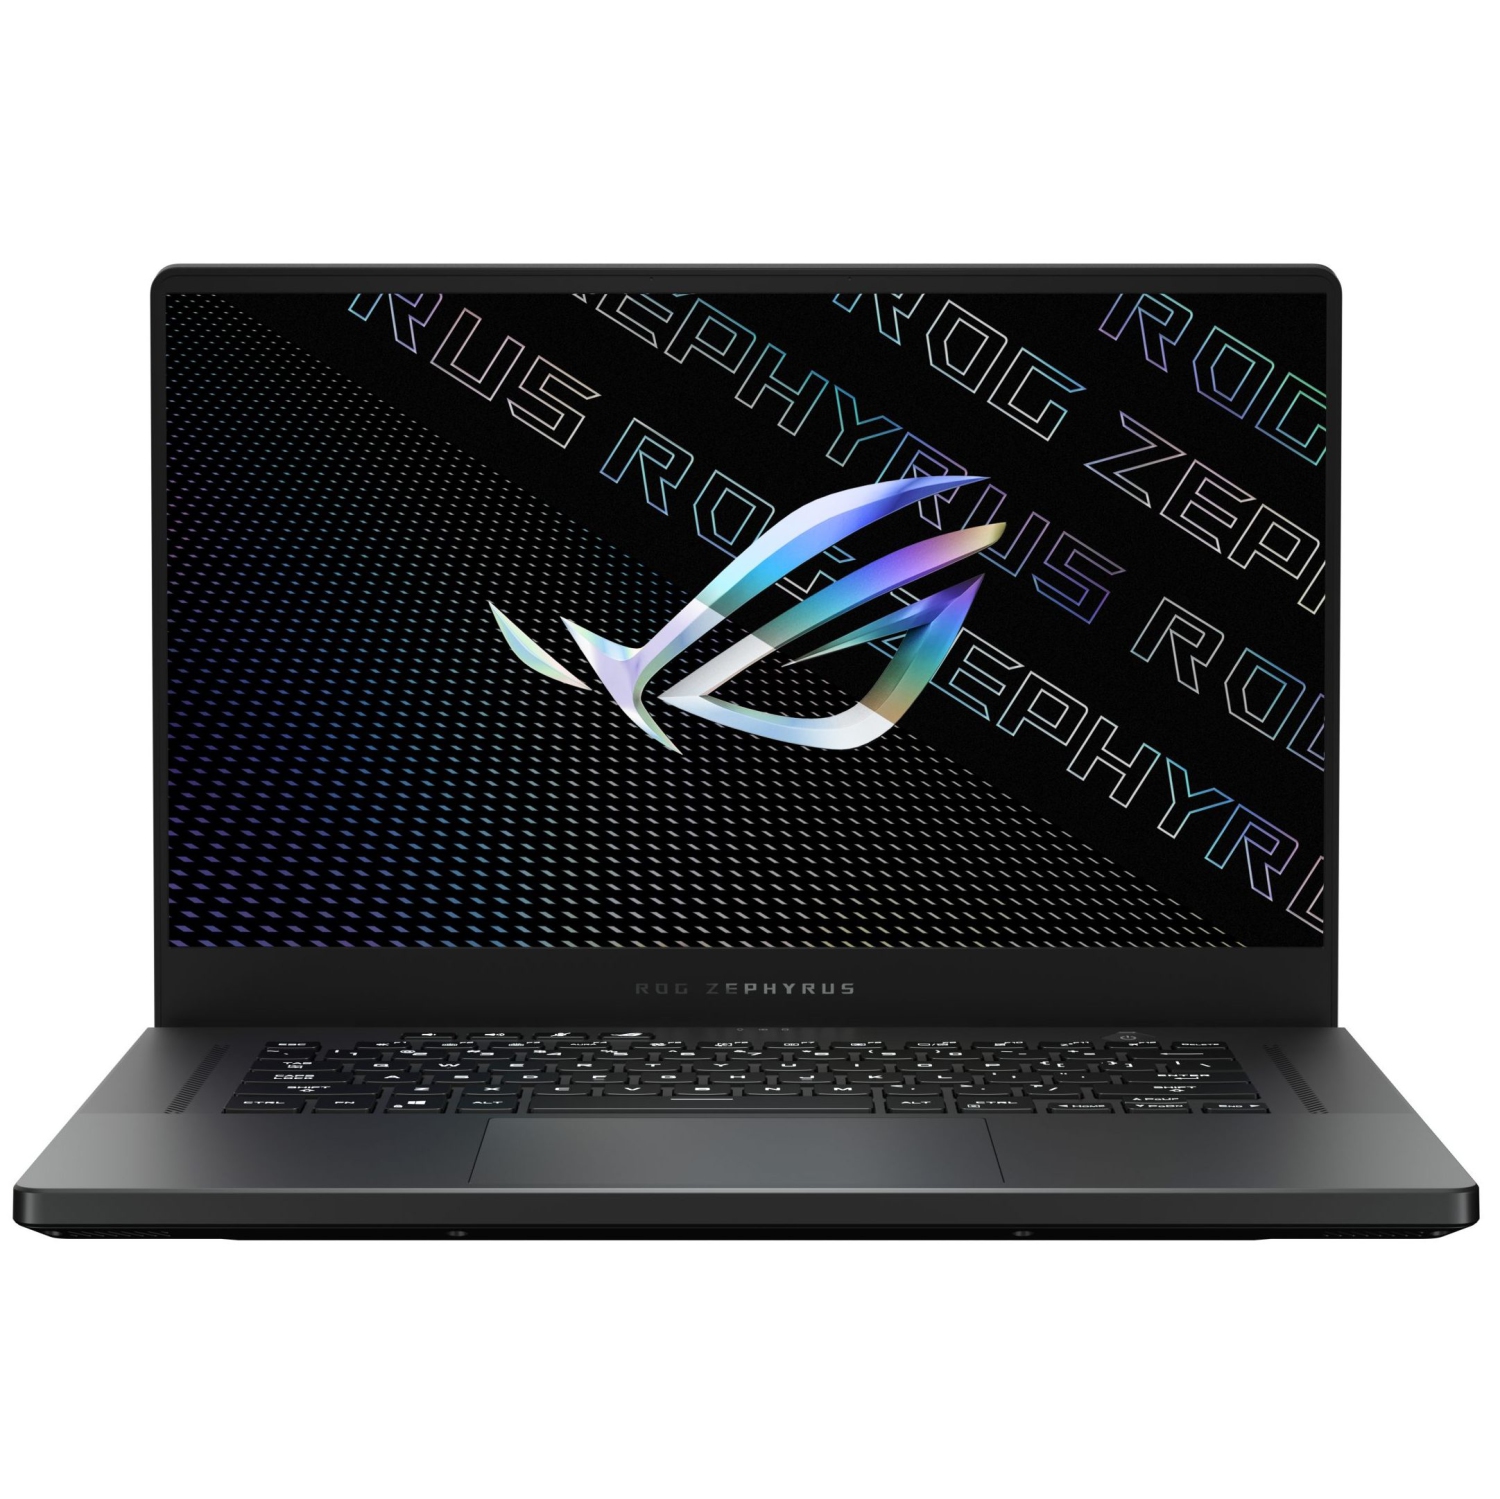 Custom ASUS ROG Zephyrus G15 Laptop (AMD Ryzen 9 5900HS, 40GB RAM, 1TB m.2 SATA SSD, NVIDIA RTX 3070, Win 10 Pro)